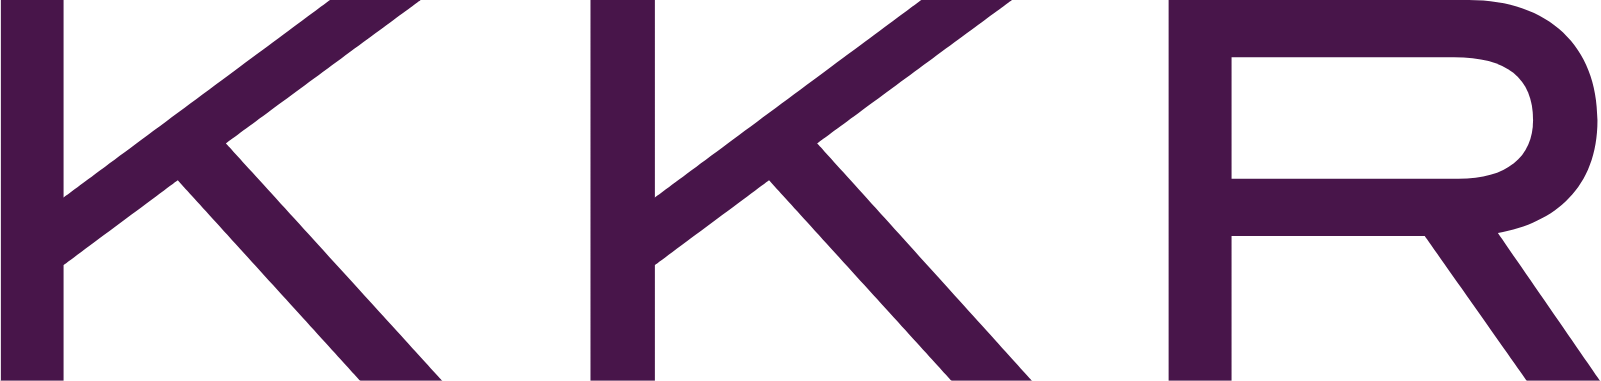 KKR & Co. Logo (transparentes PNG)